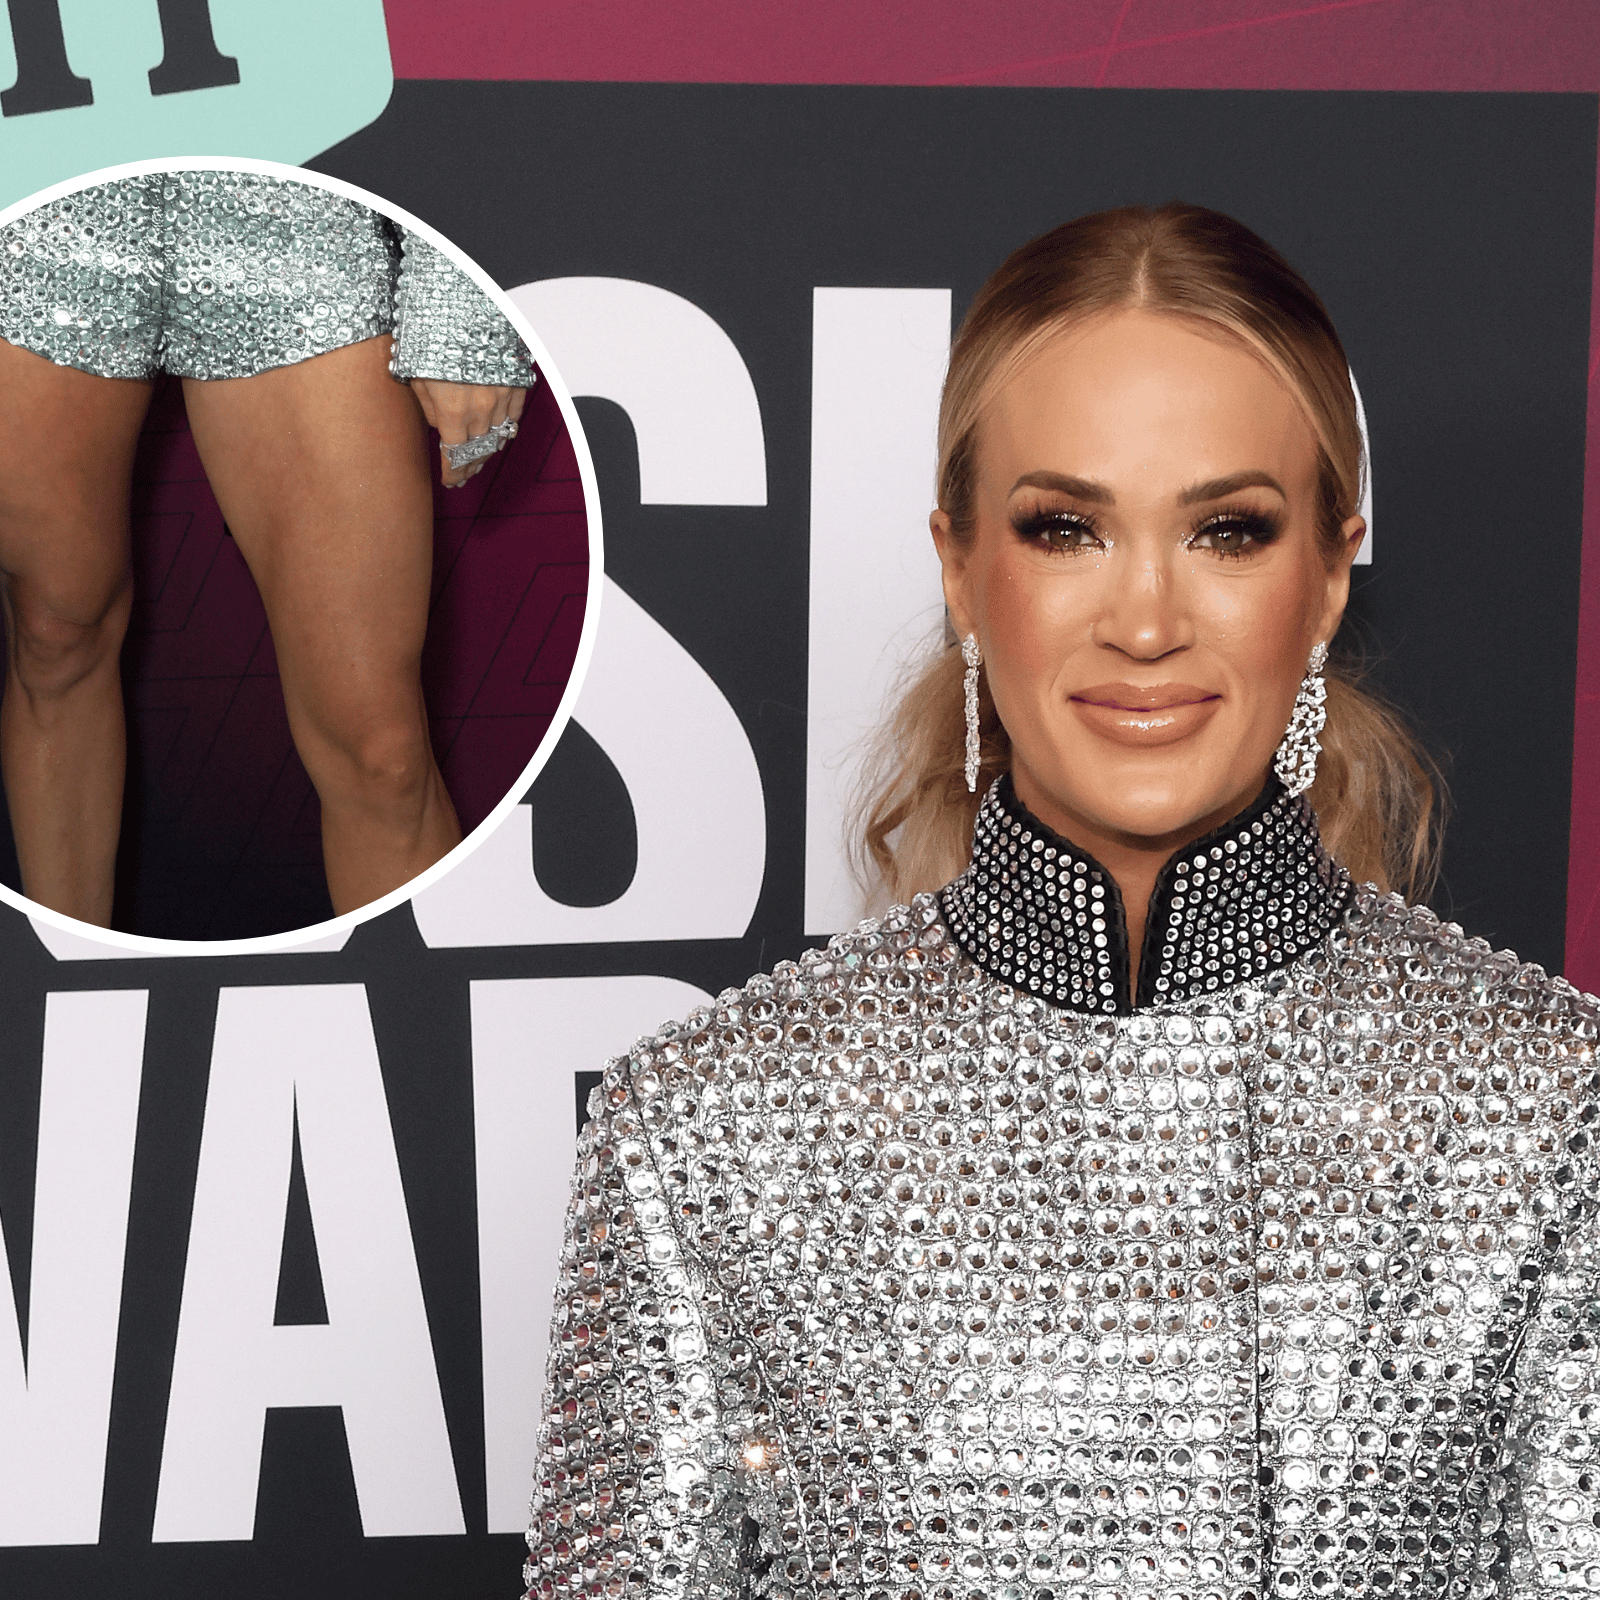 Carrie Underwood's Legs at CMT Music Awards Spark Debate